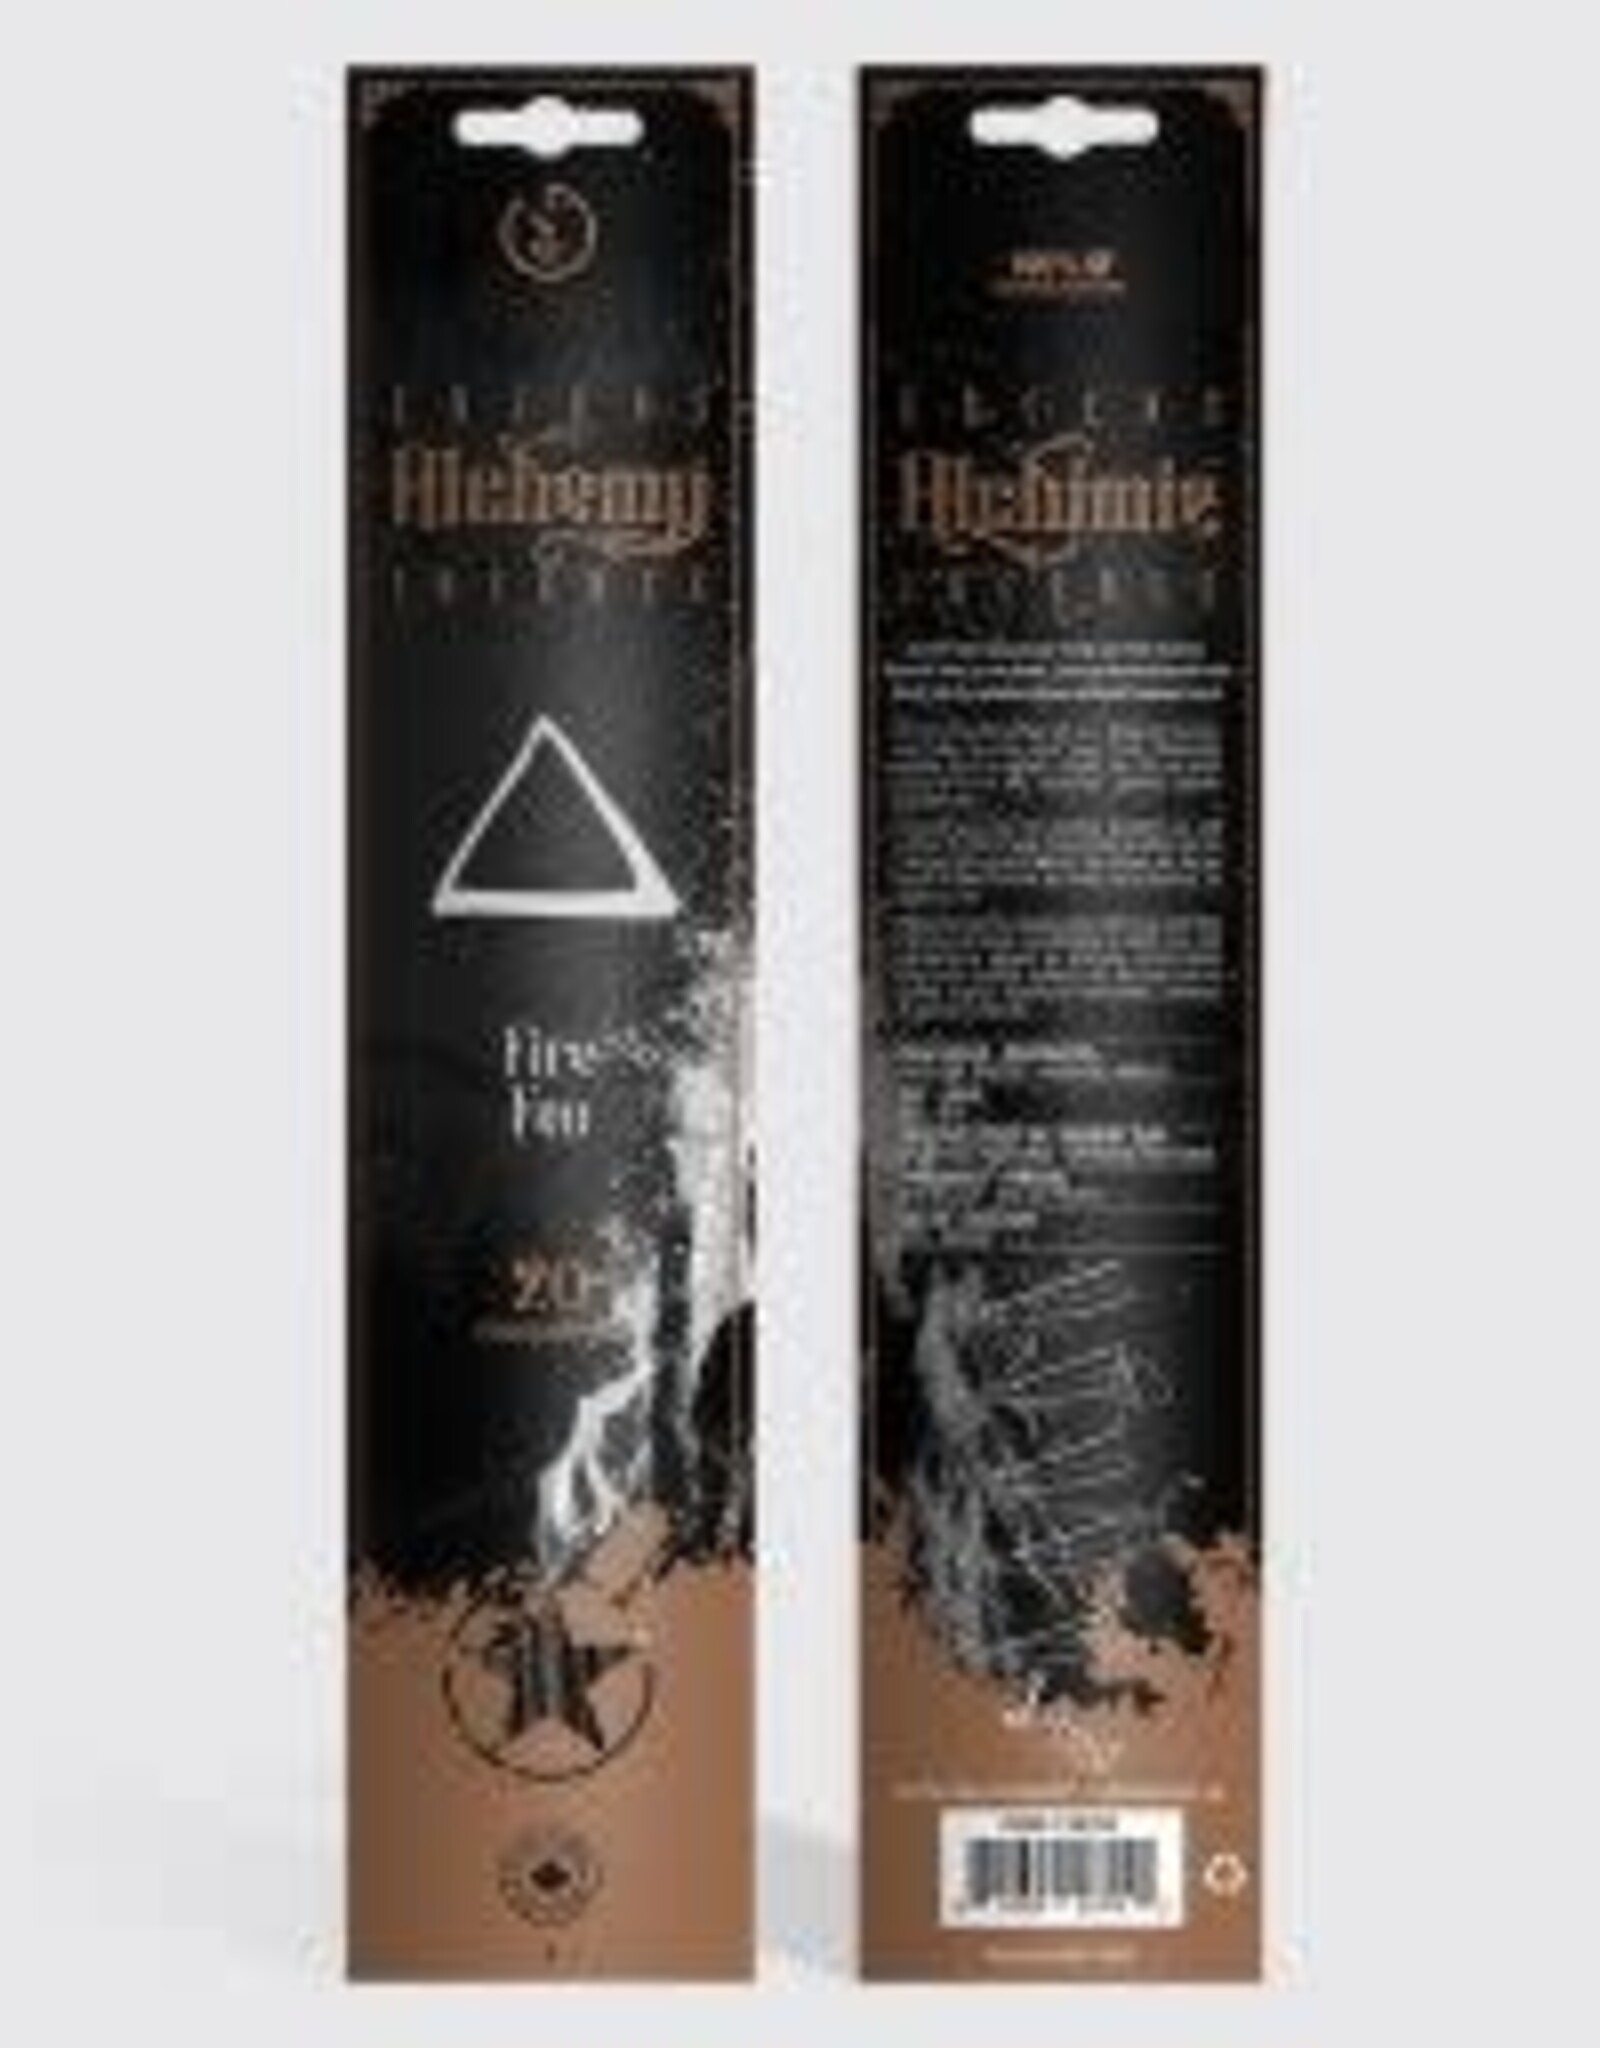 Alchemy Incense: Fire